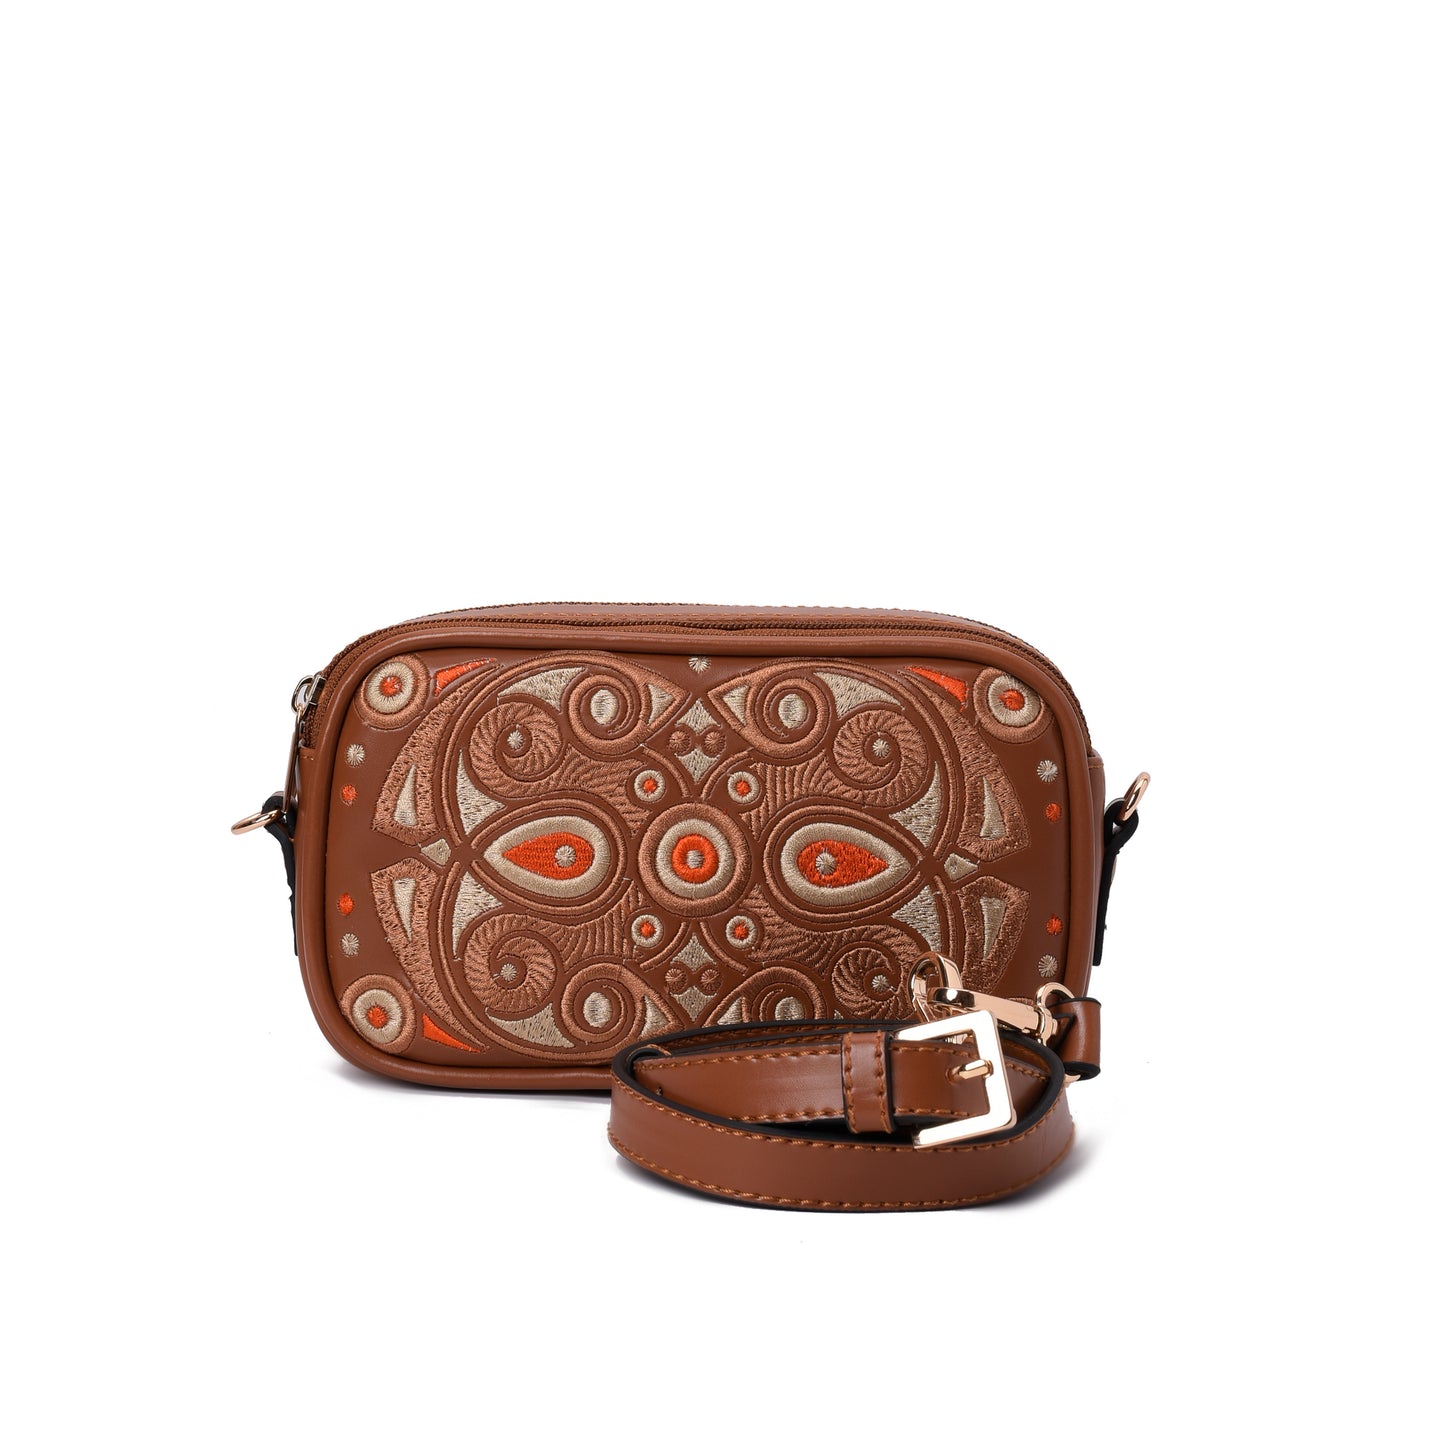 Burst Brown Handbag - Code 944